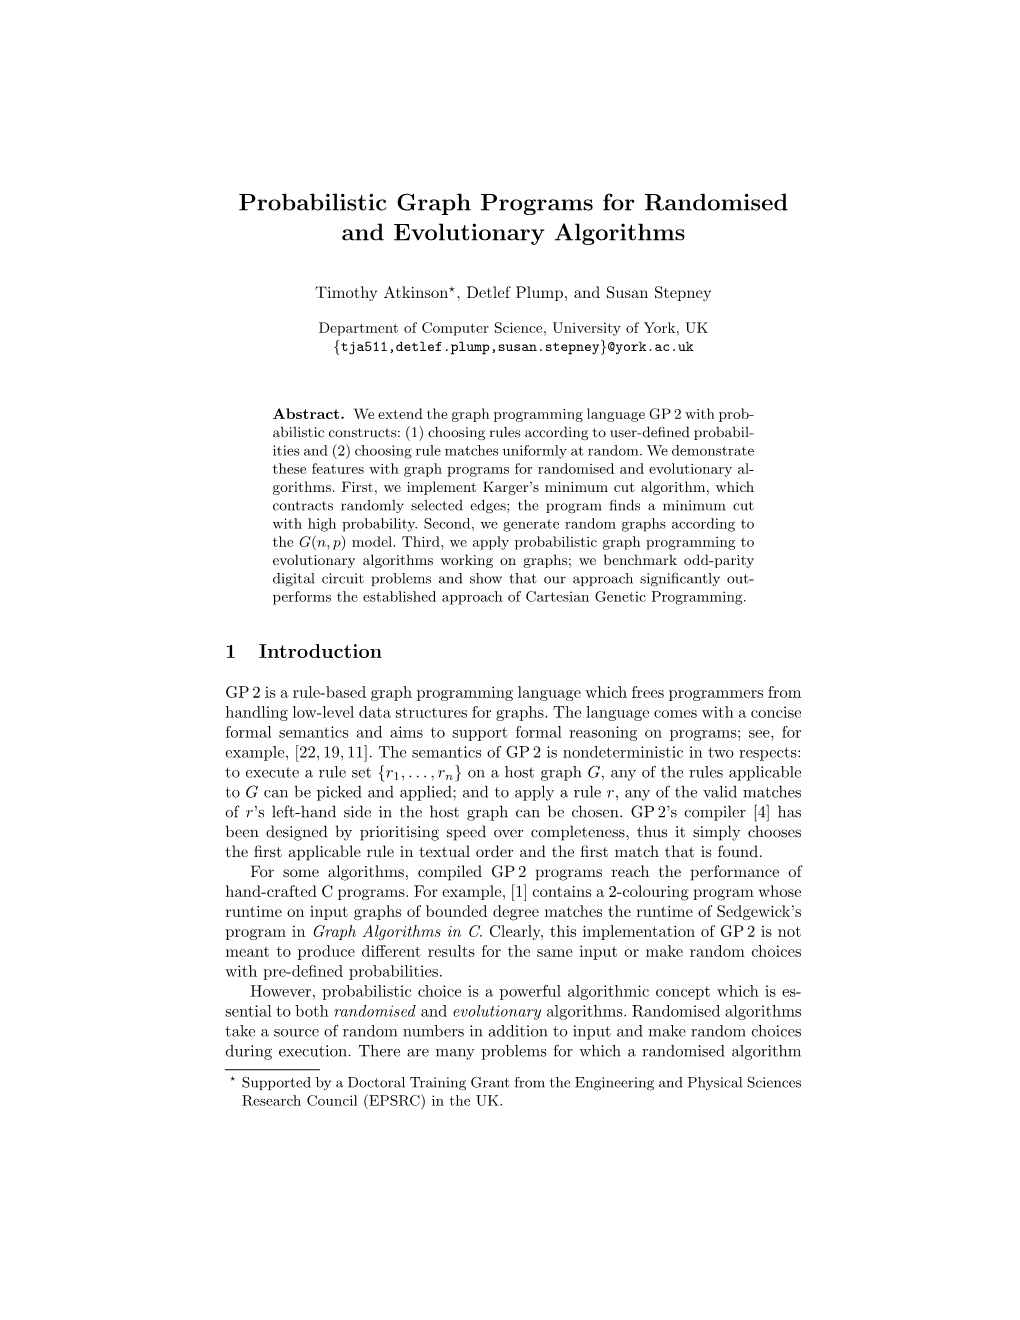 Probabilistic Graph Programs for Randomised and Evolutionary Algorithms